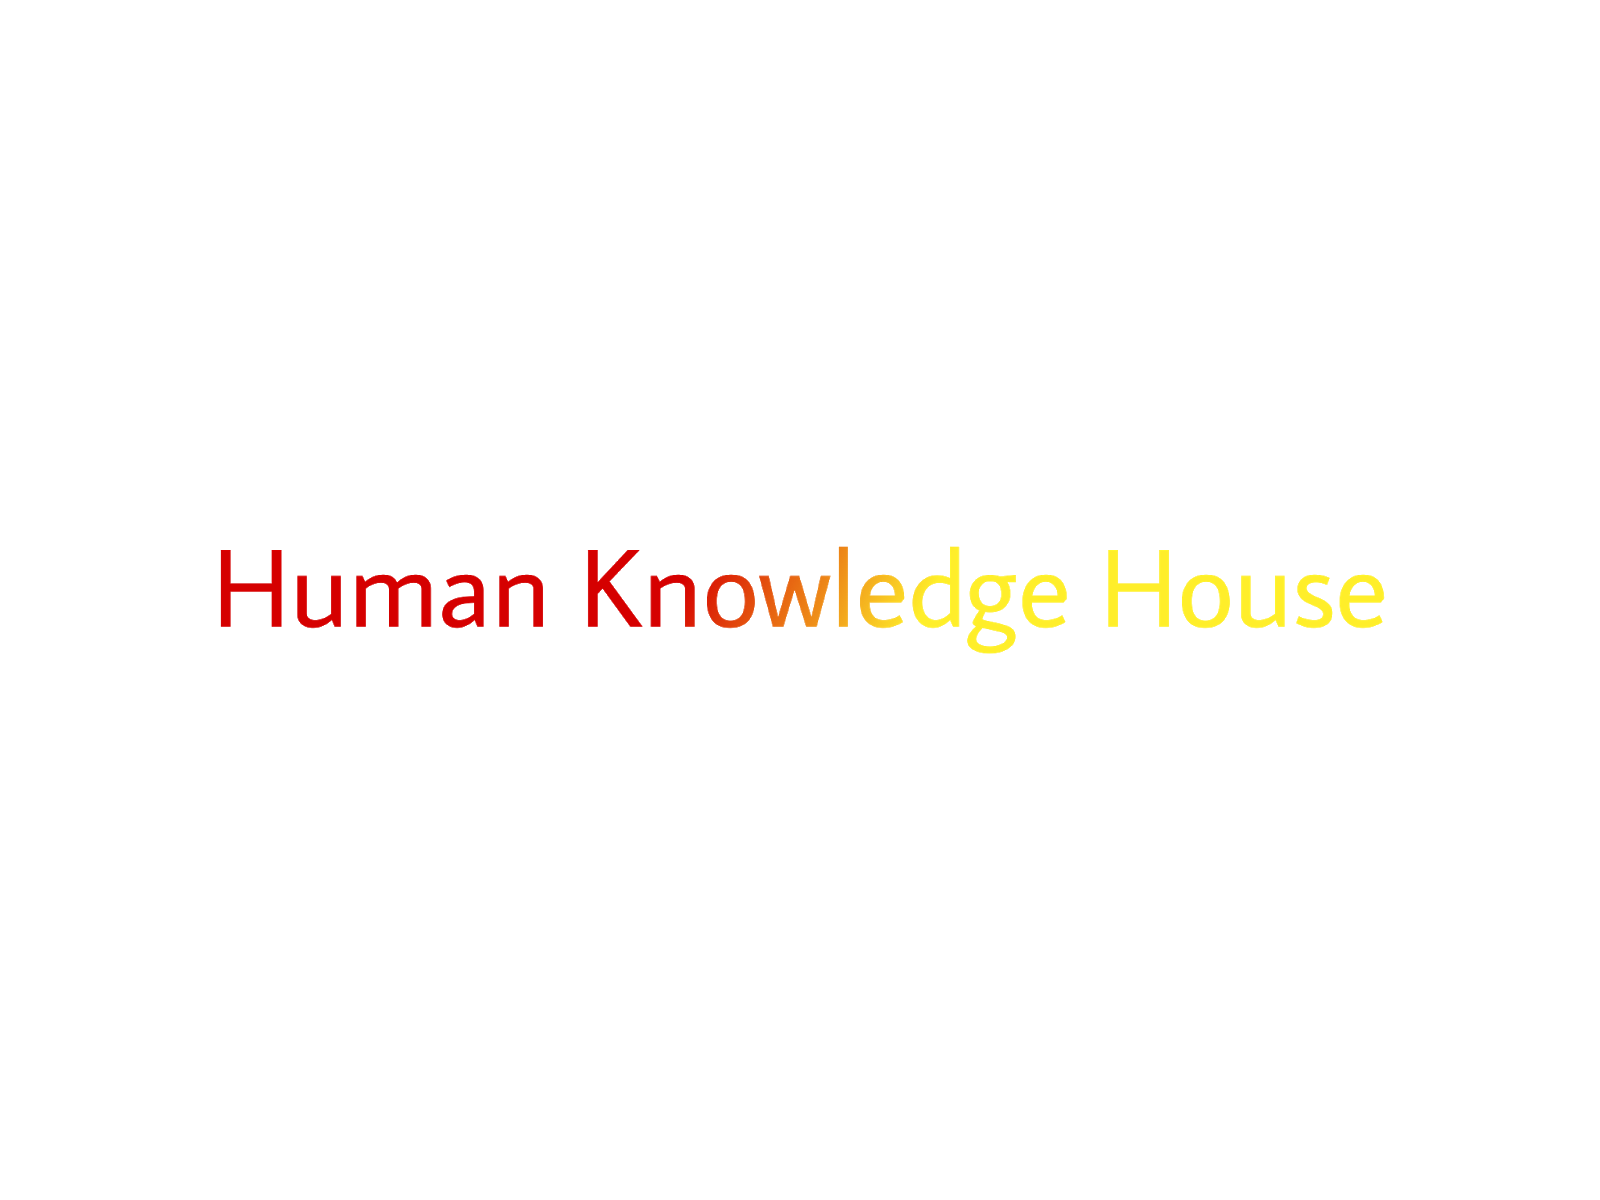 Human knowledge house 